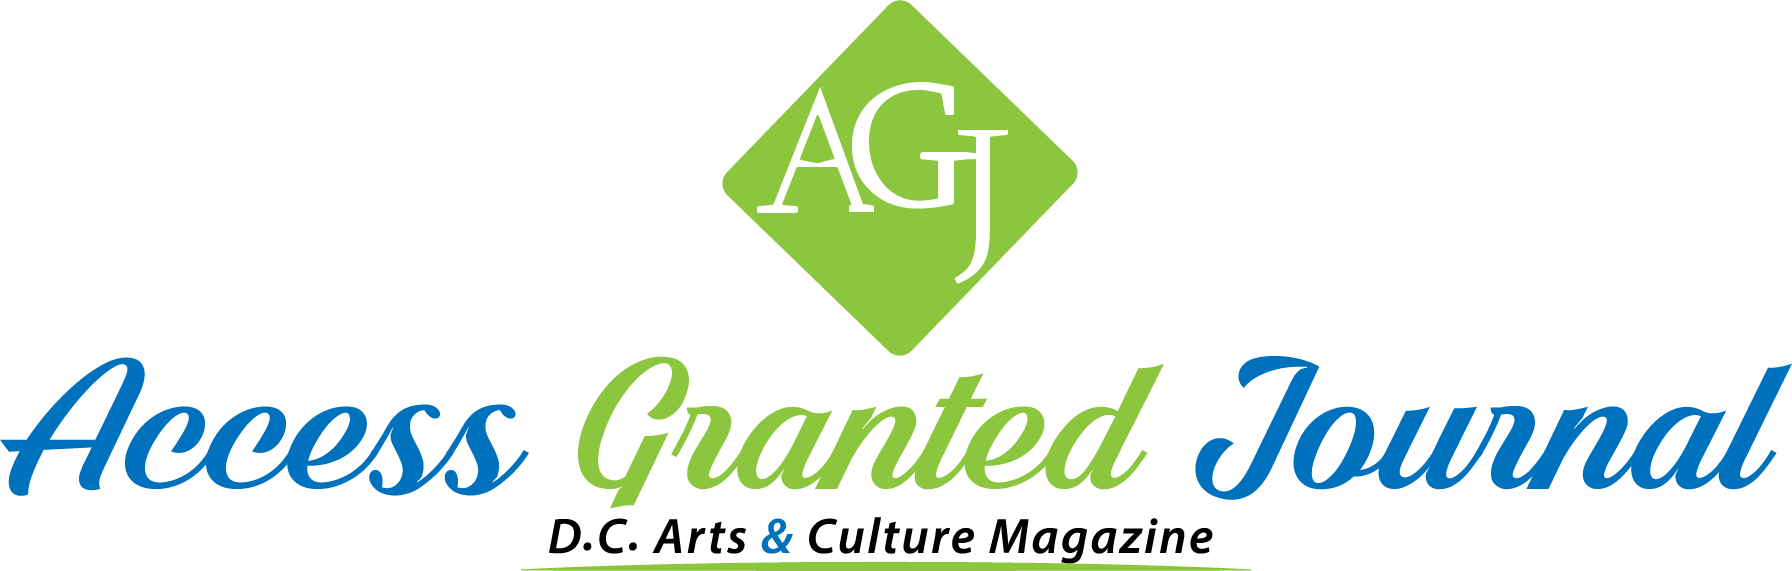 AGI Magazine